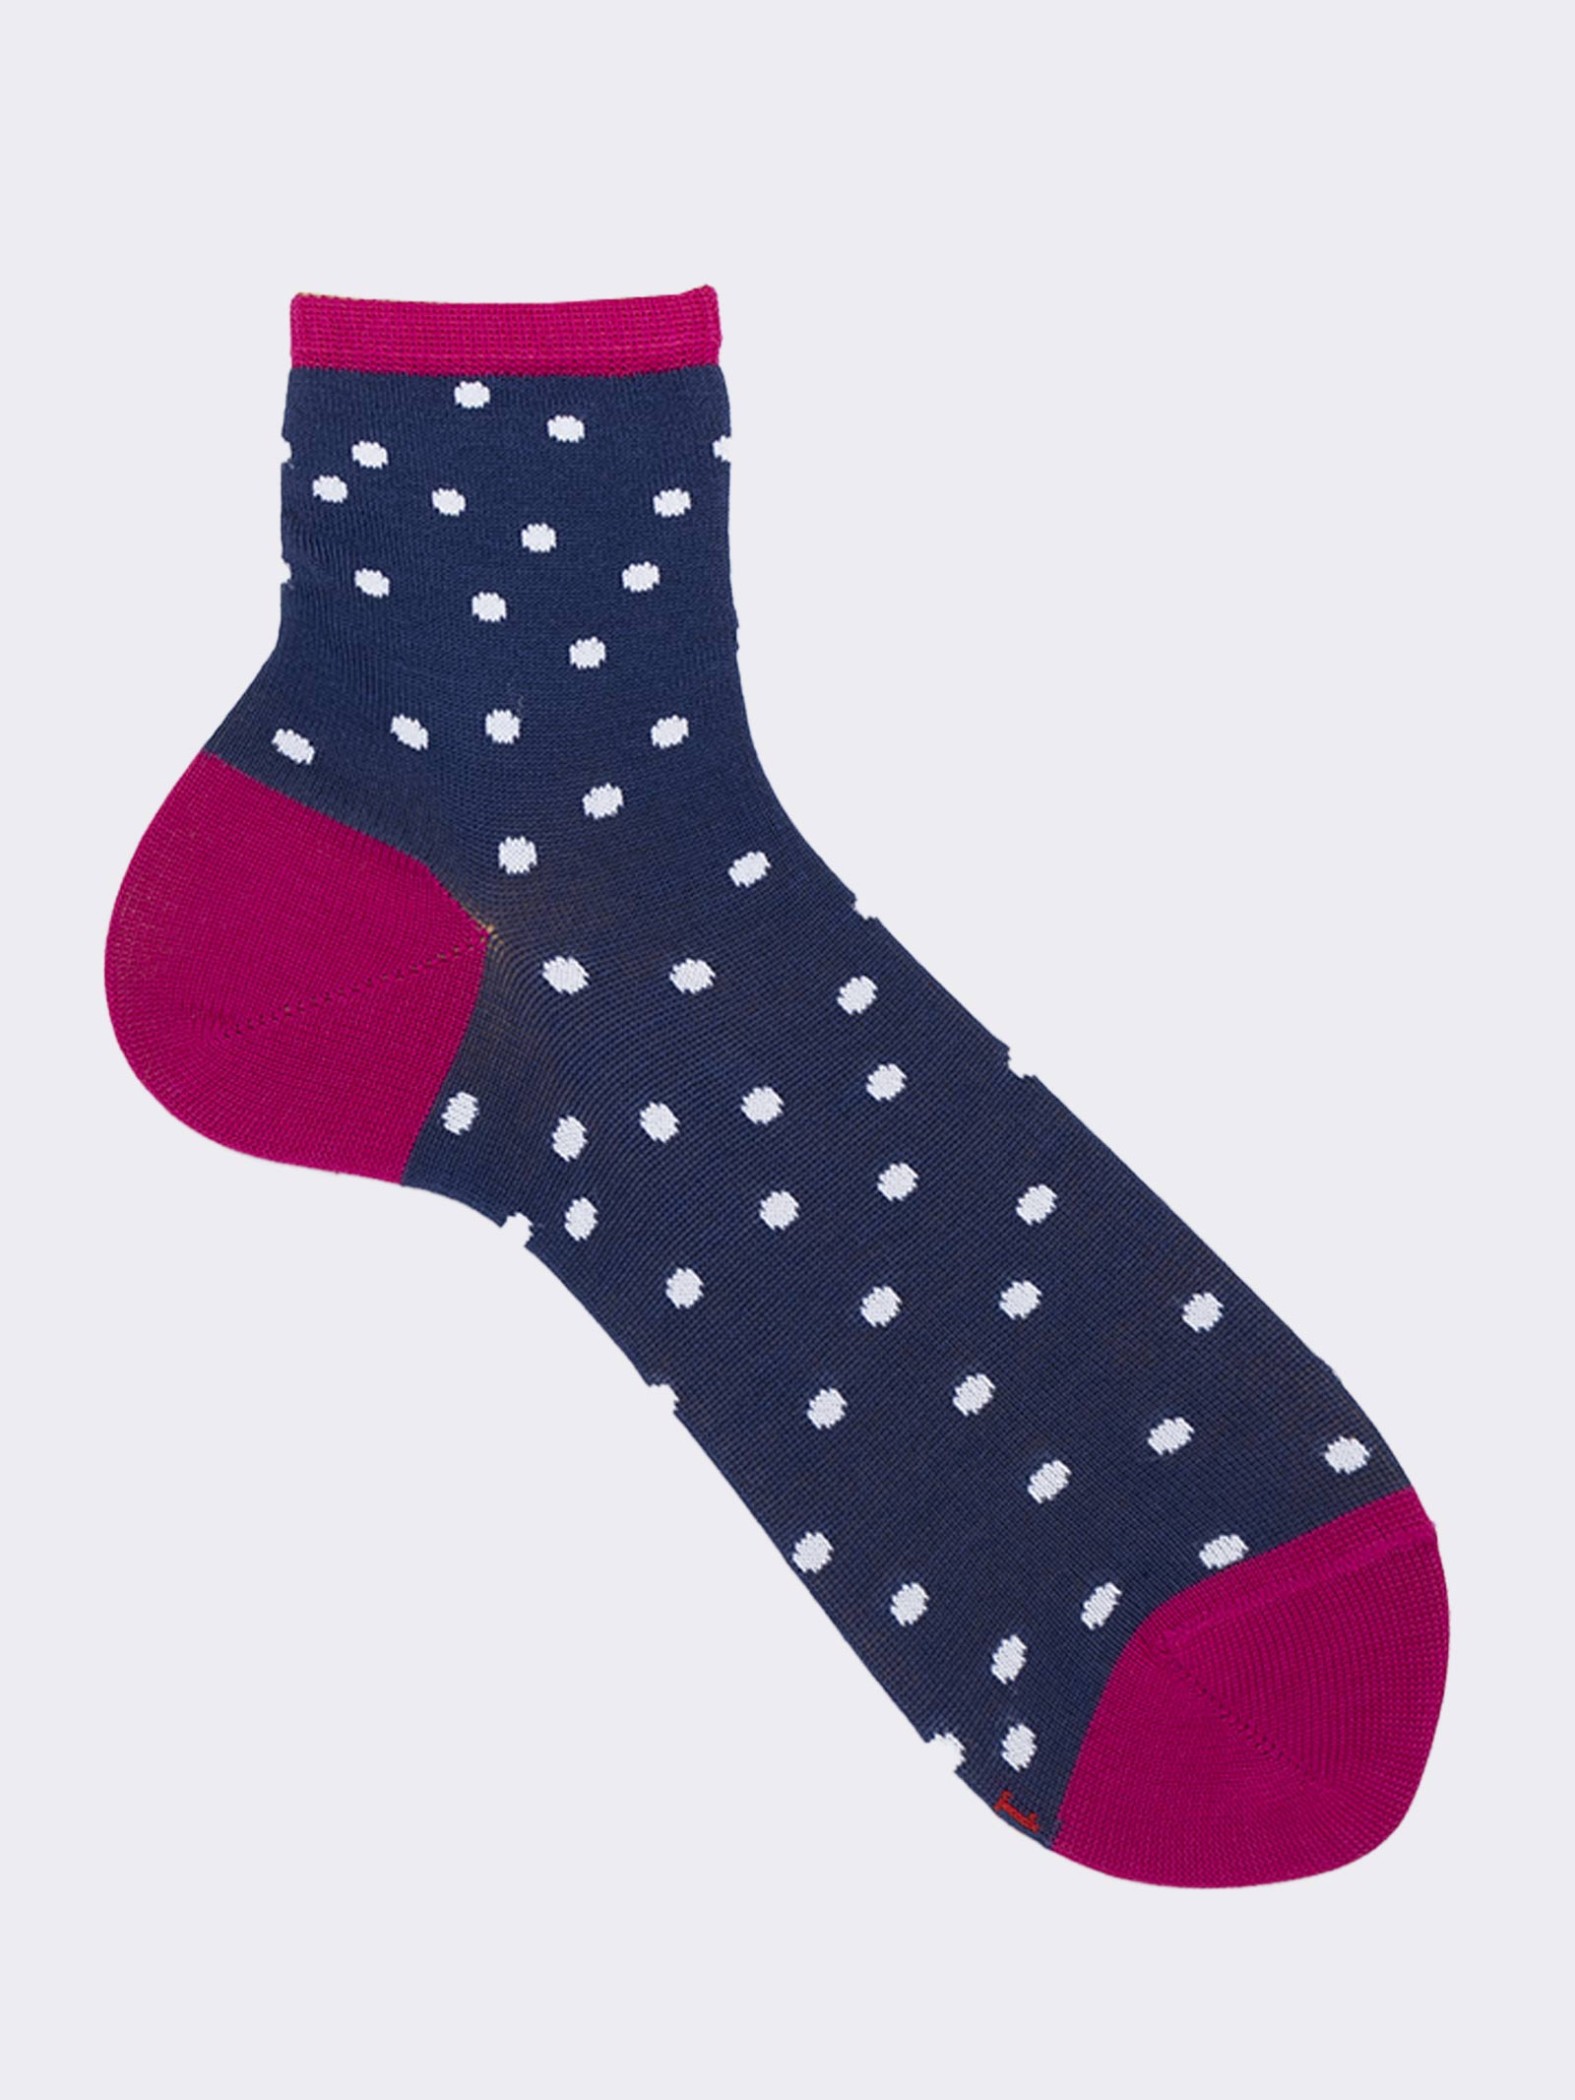 Small Polka Dot Patterned Short Socks